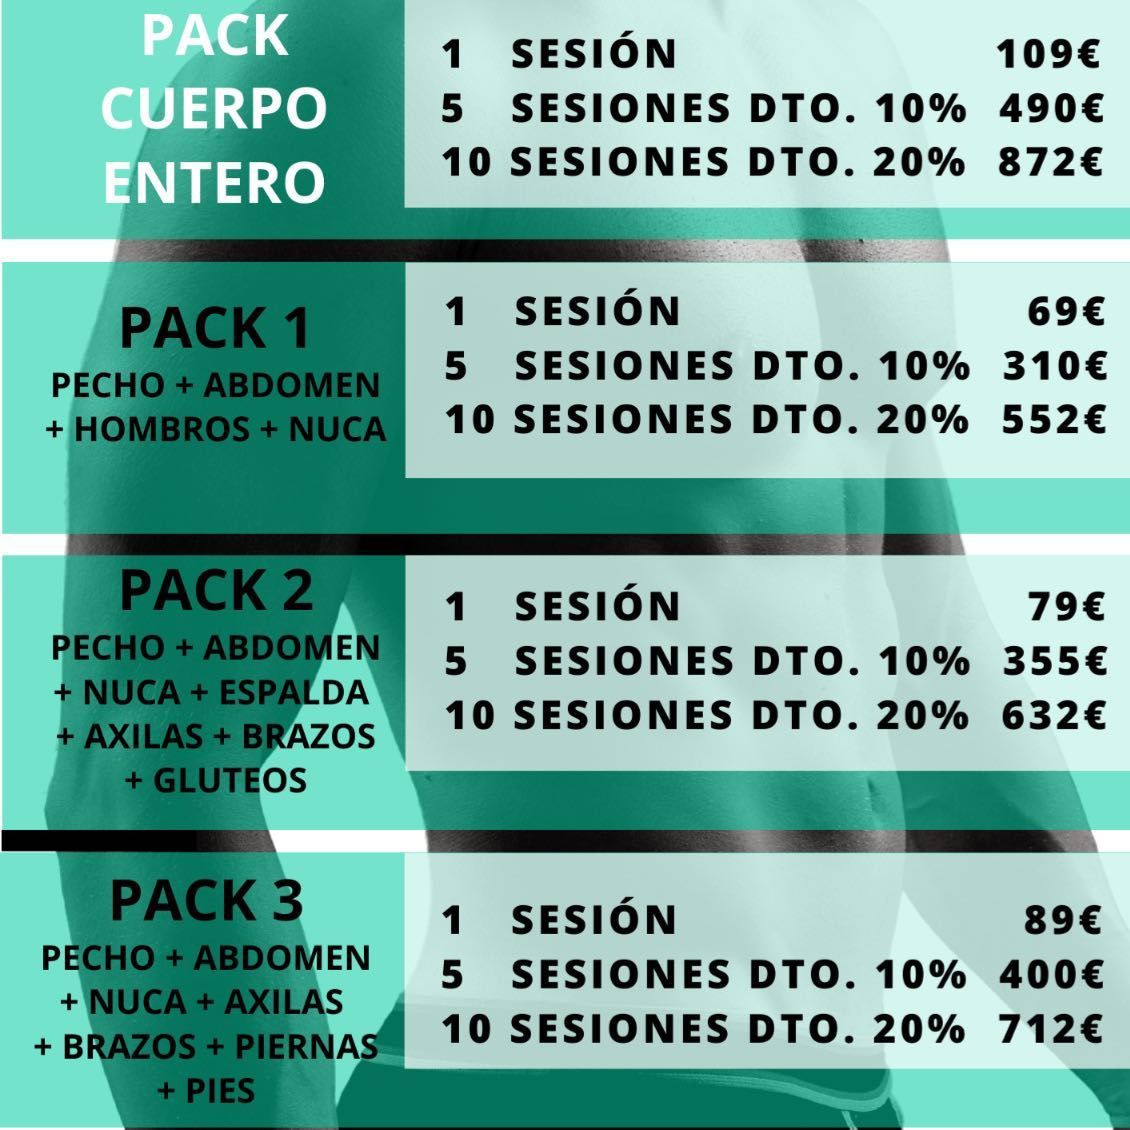 Pack 2(Pecho+Abdom+Nuca+Espald+Axi+Brazos+Gluteos) portfolio